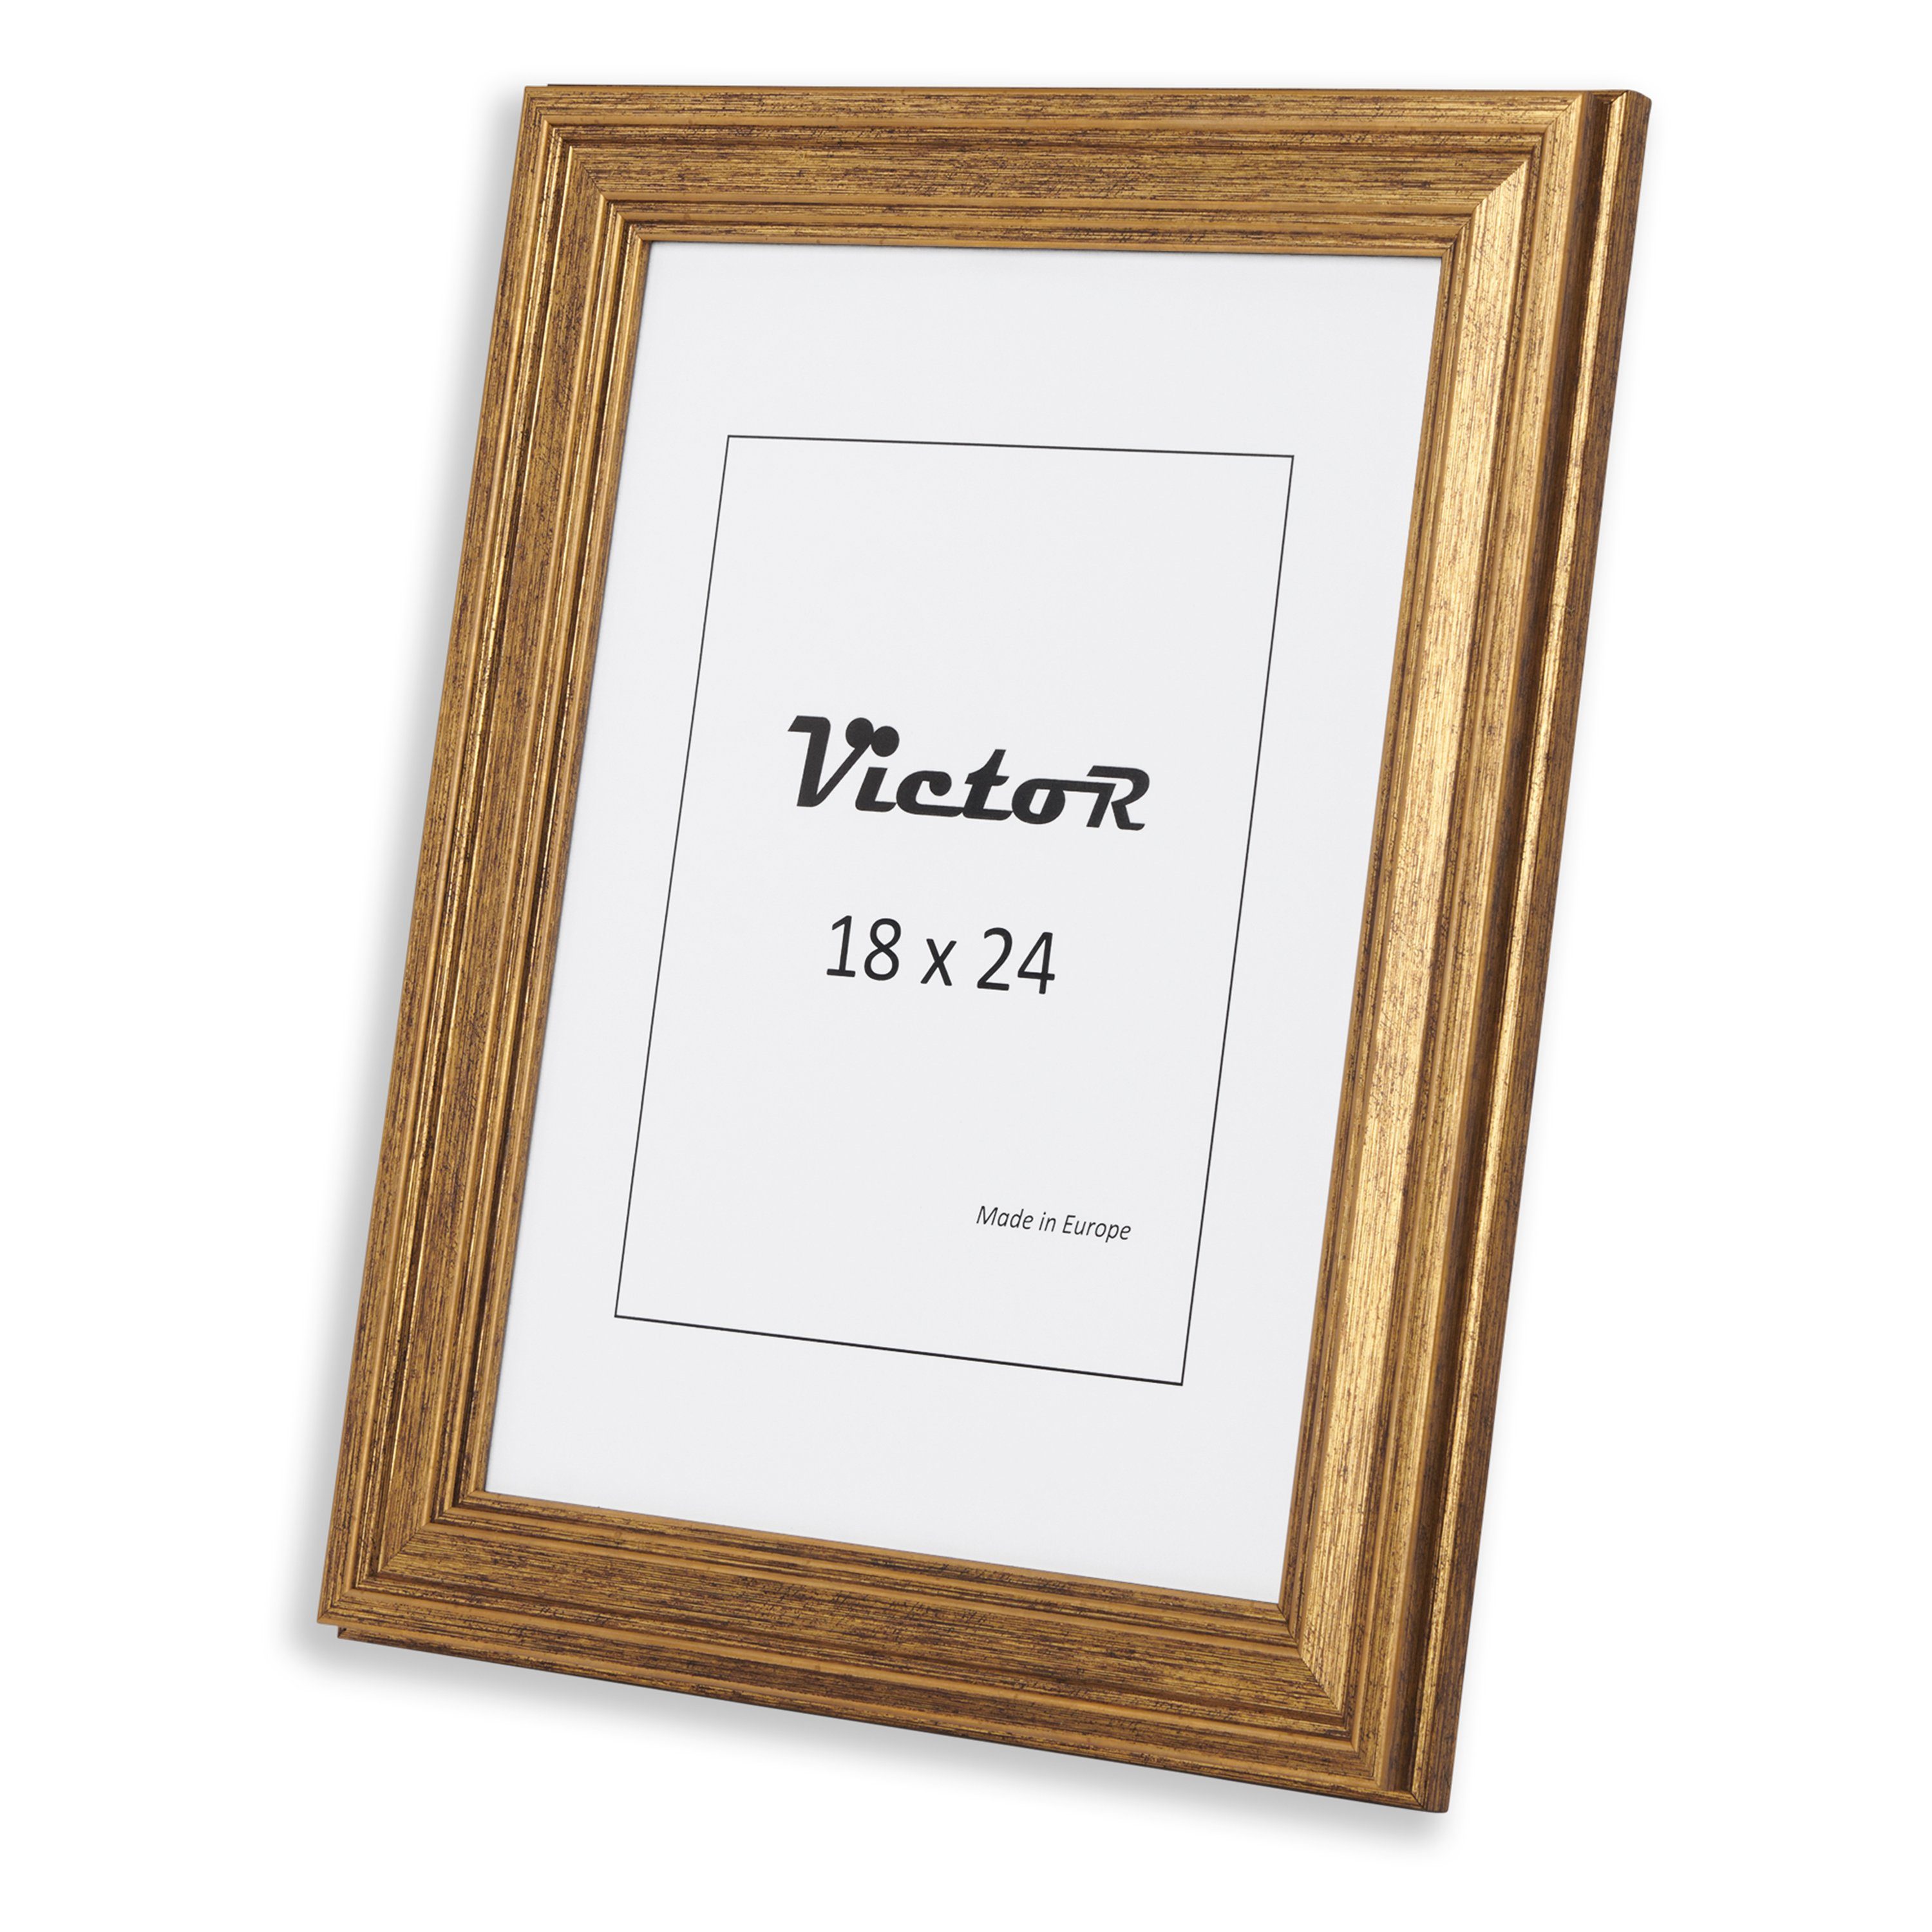 3er Bilderrahmen Leiste: Victor 18x24 cm, Set (Zenith) Goya, 19x31mm, gold, Rahmen Kunststoff in